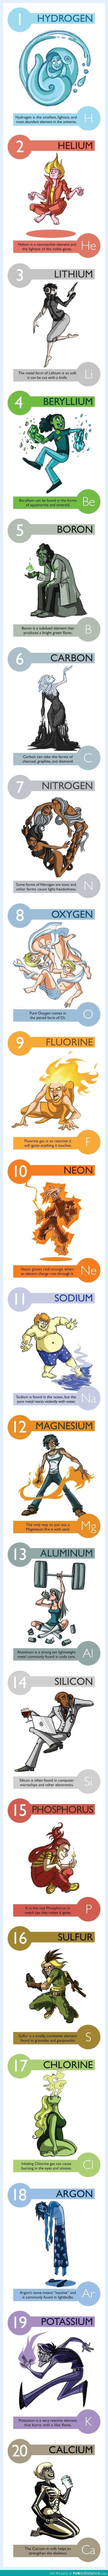 Cartoon elements makes the periodic table fun